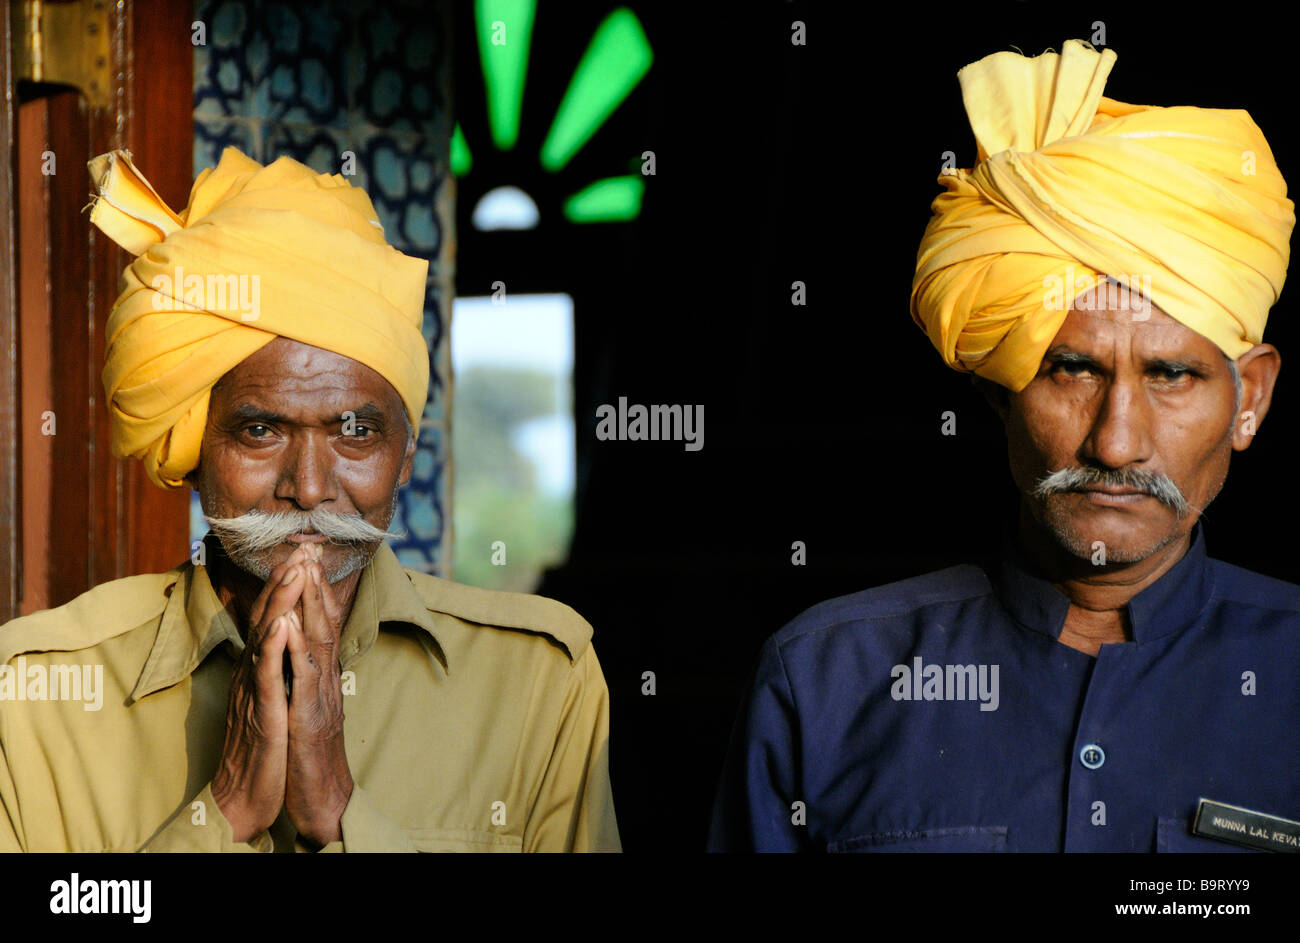 Hotel staff in orange turbans bid farewell to guests Stock Photo